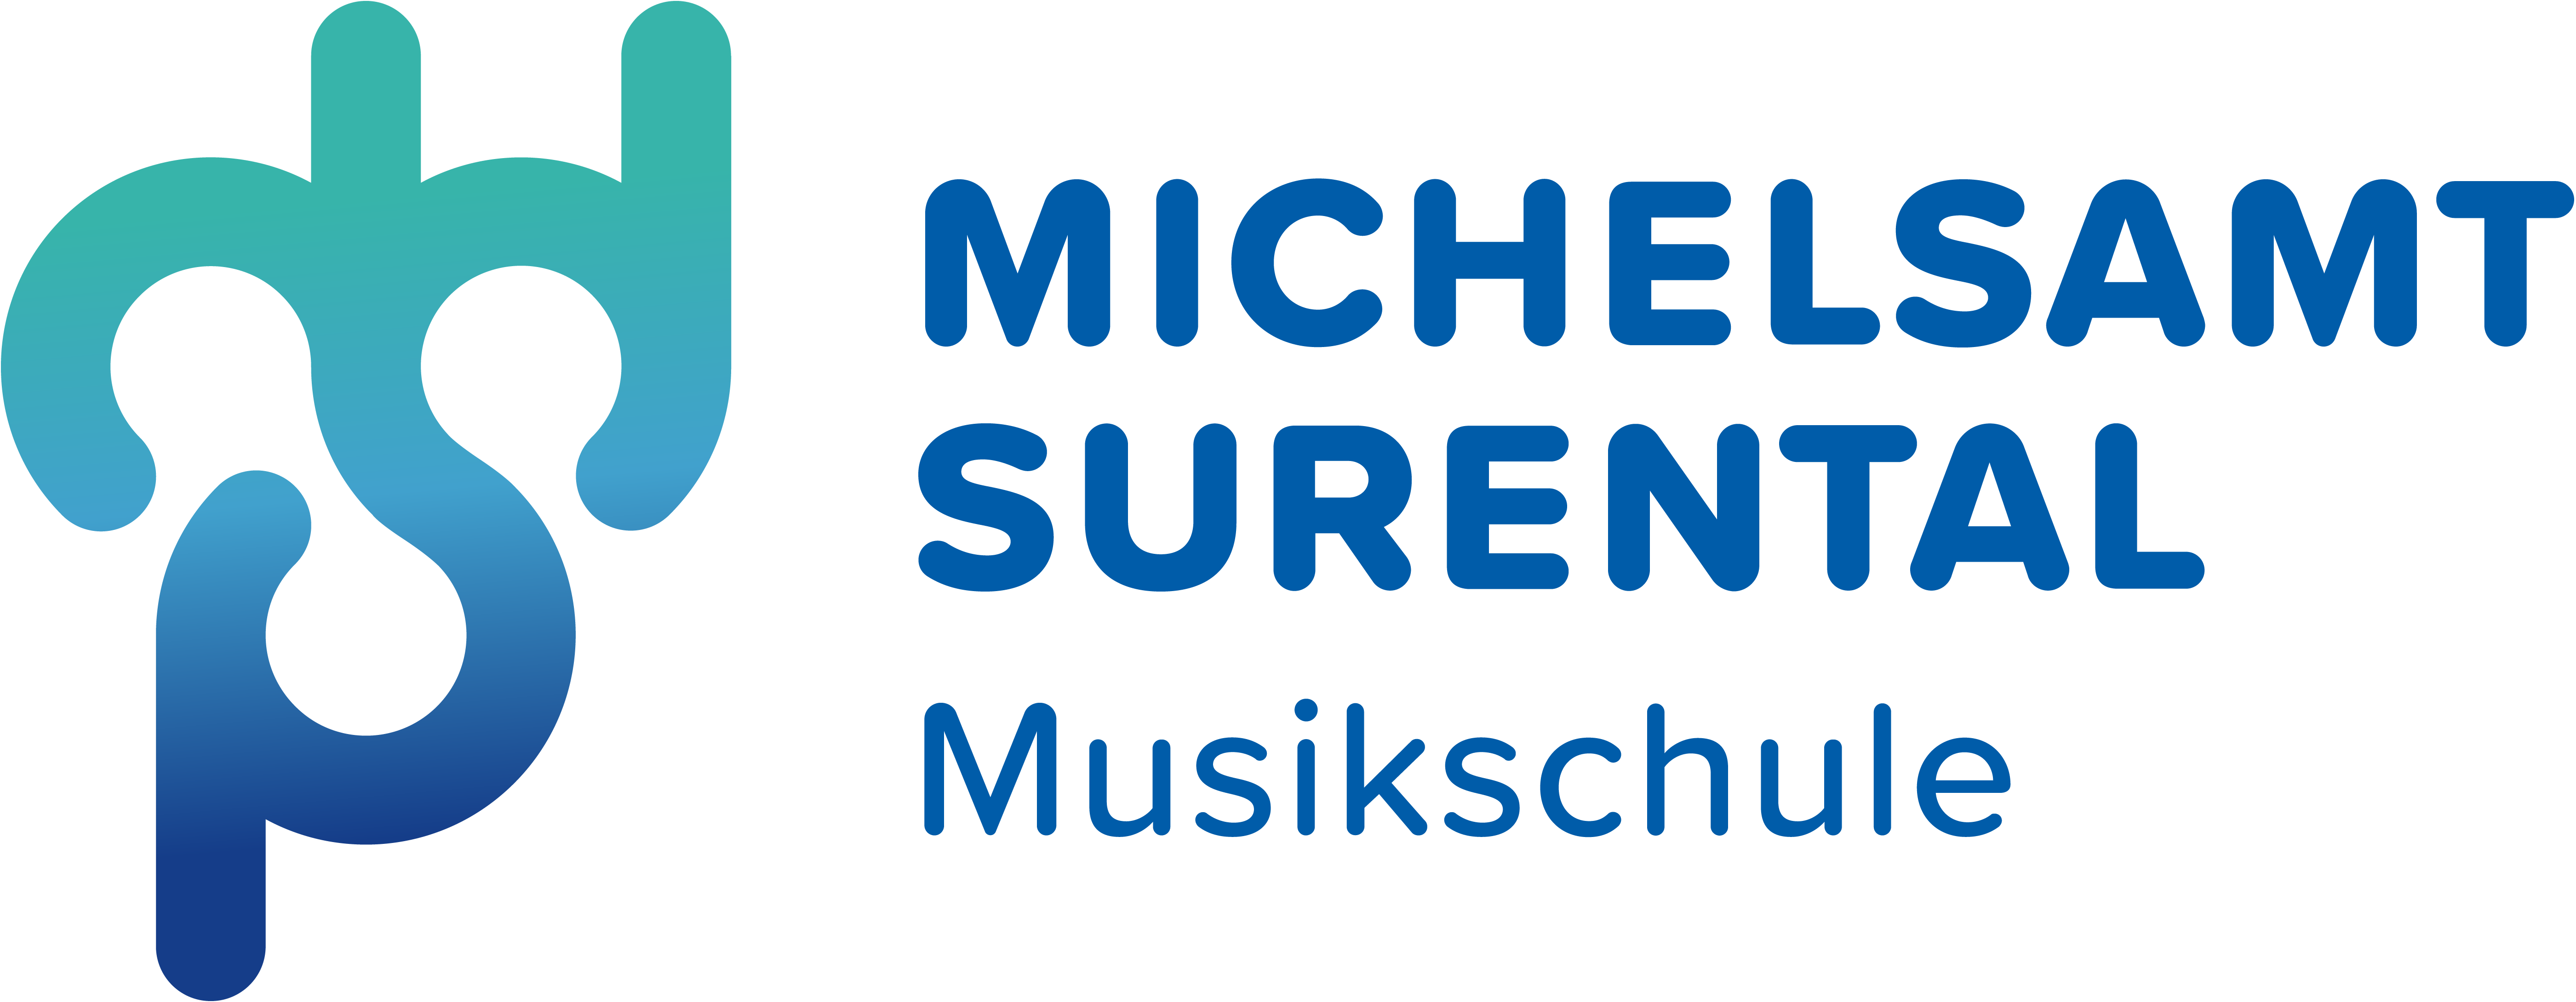 Logo Musikschule Michelsamt Surental